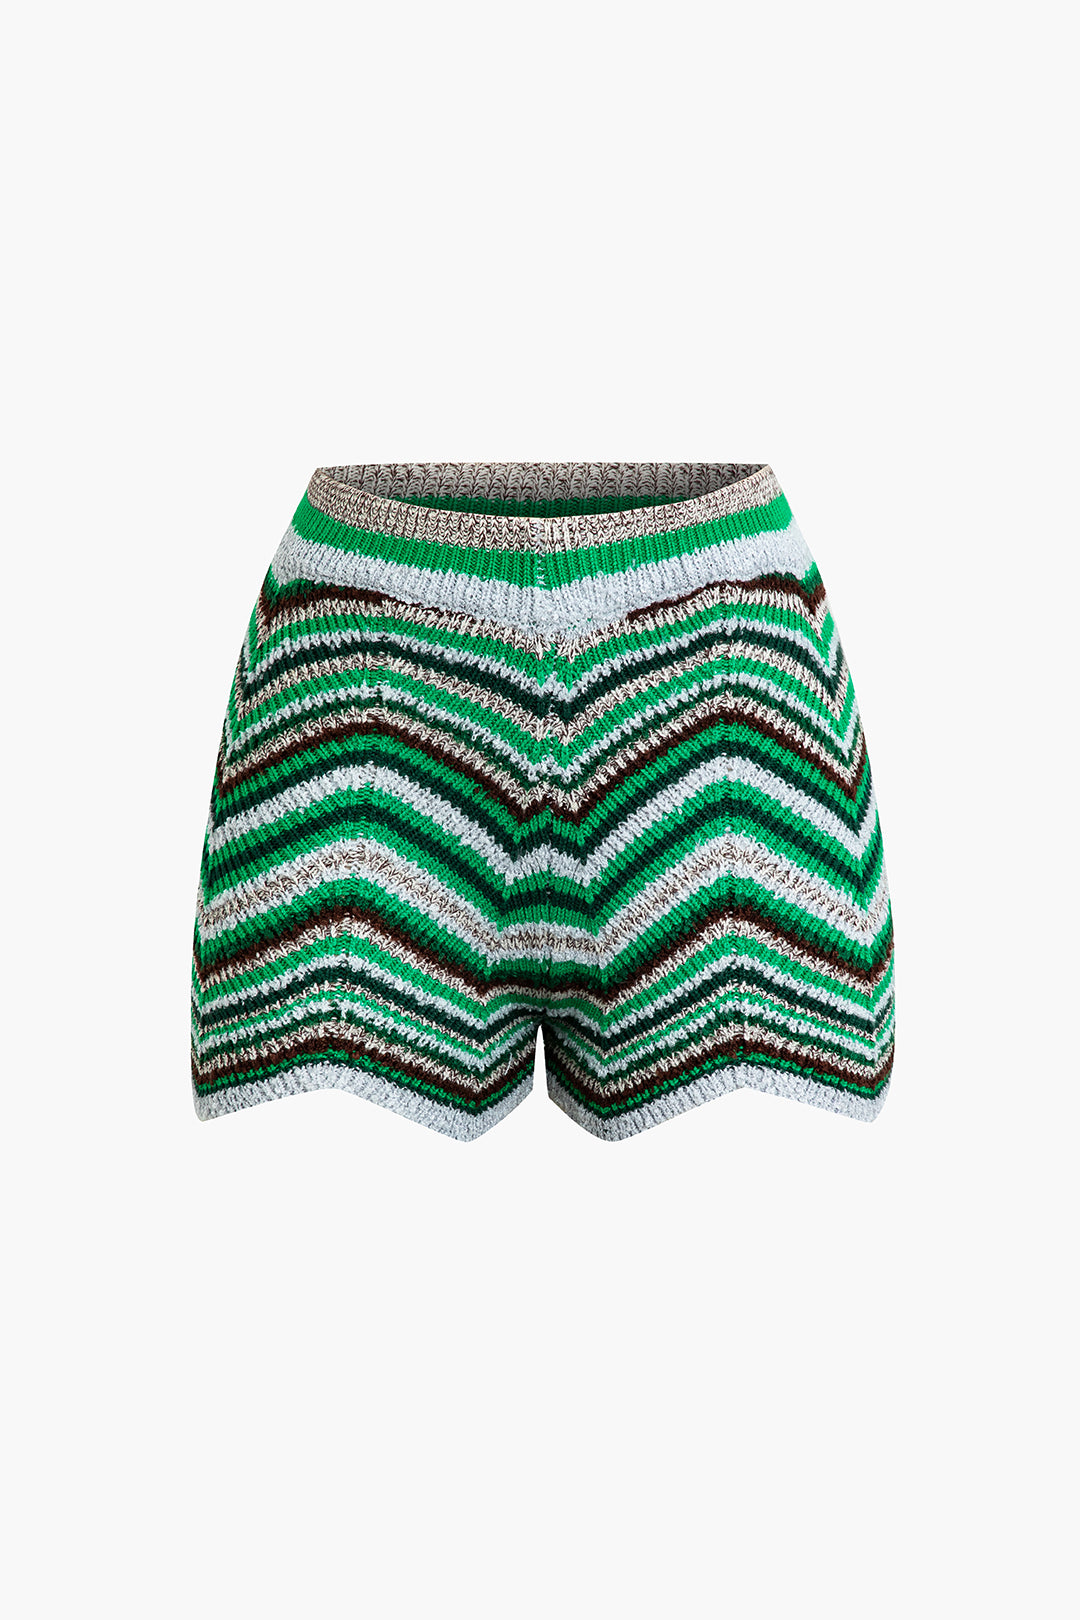 Chevron Striped Knit Shorts